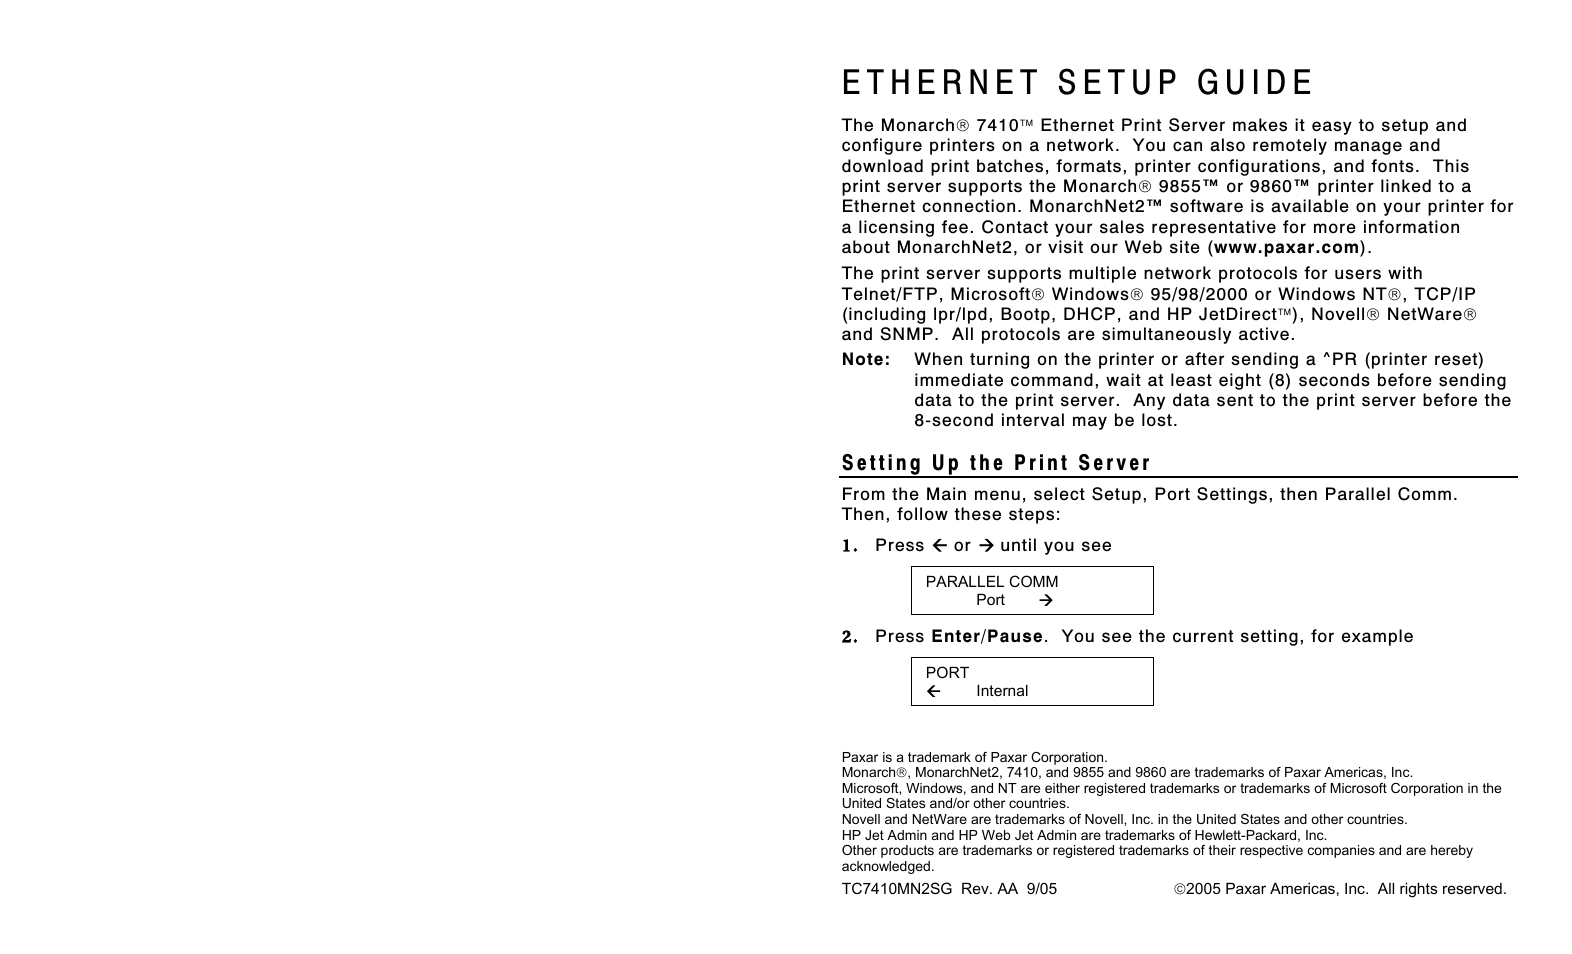 7410 Network Card Setup Guide